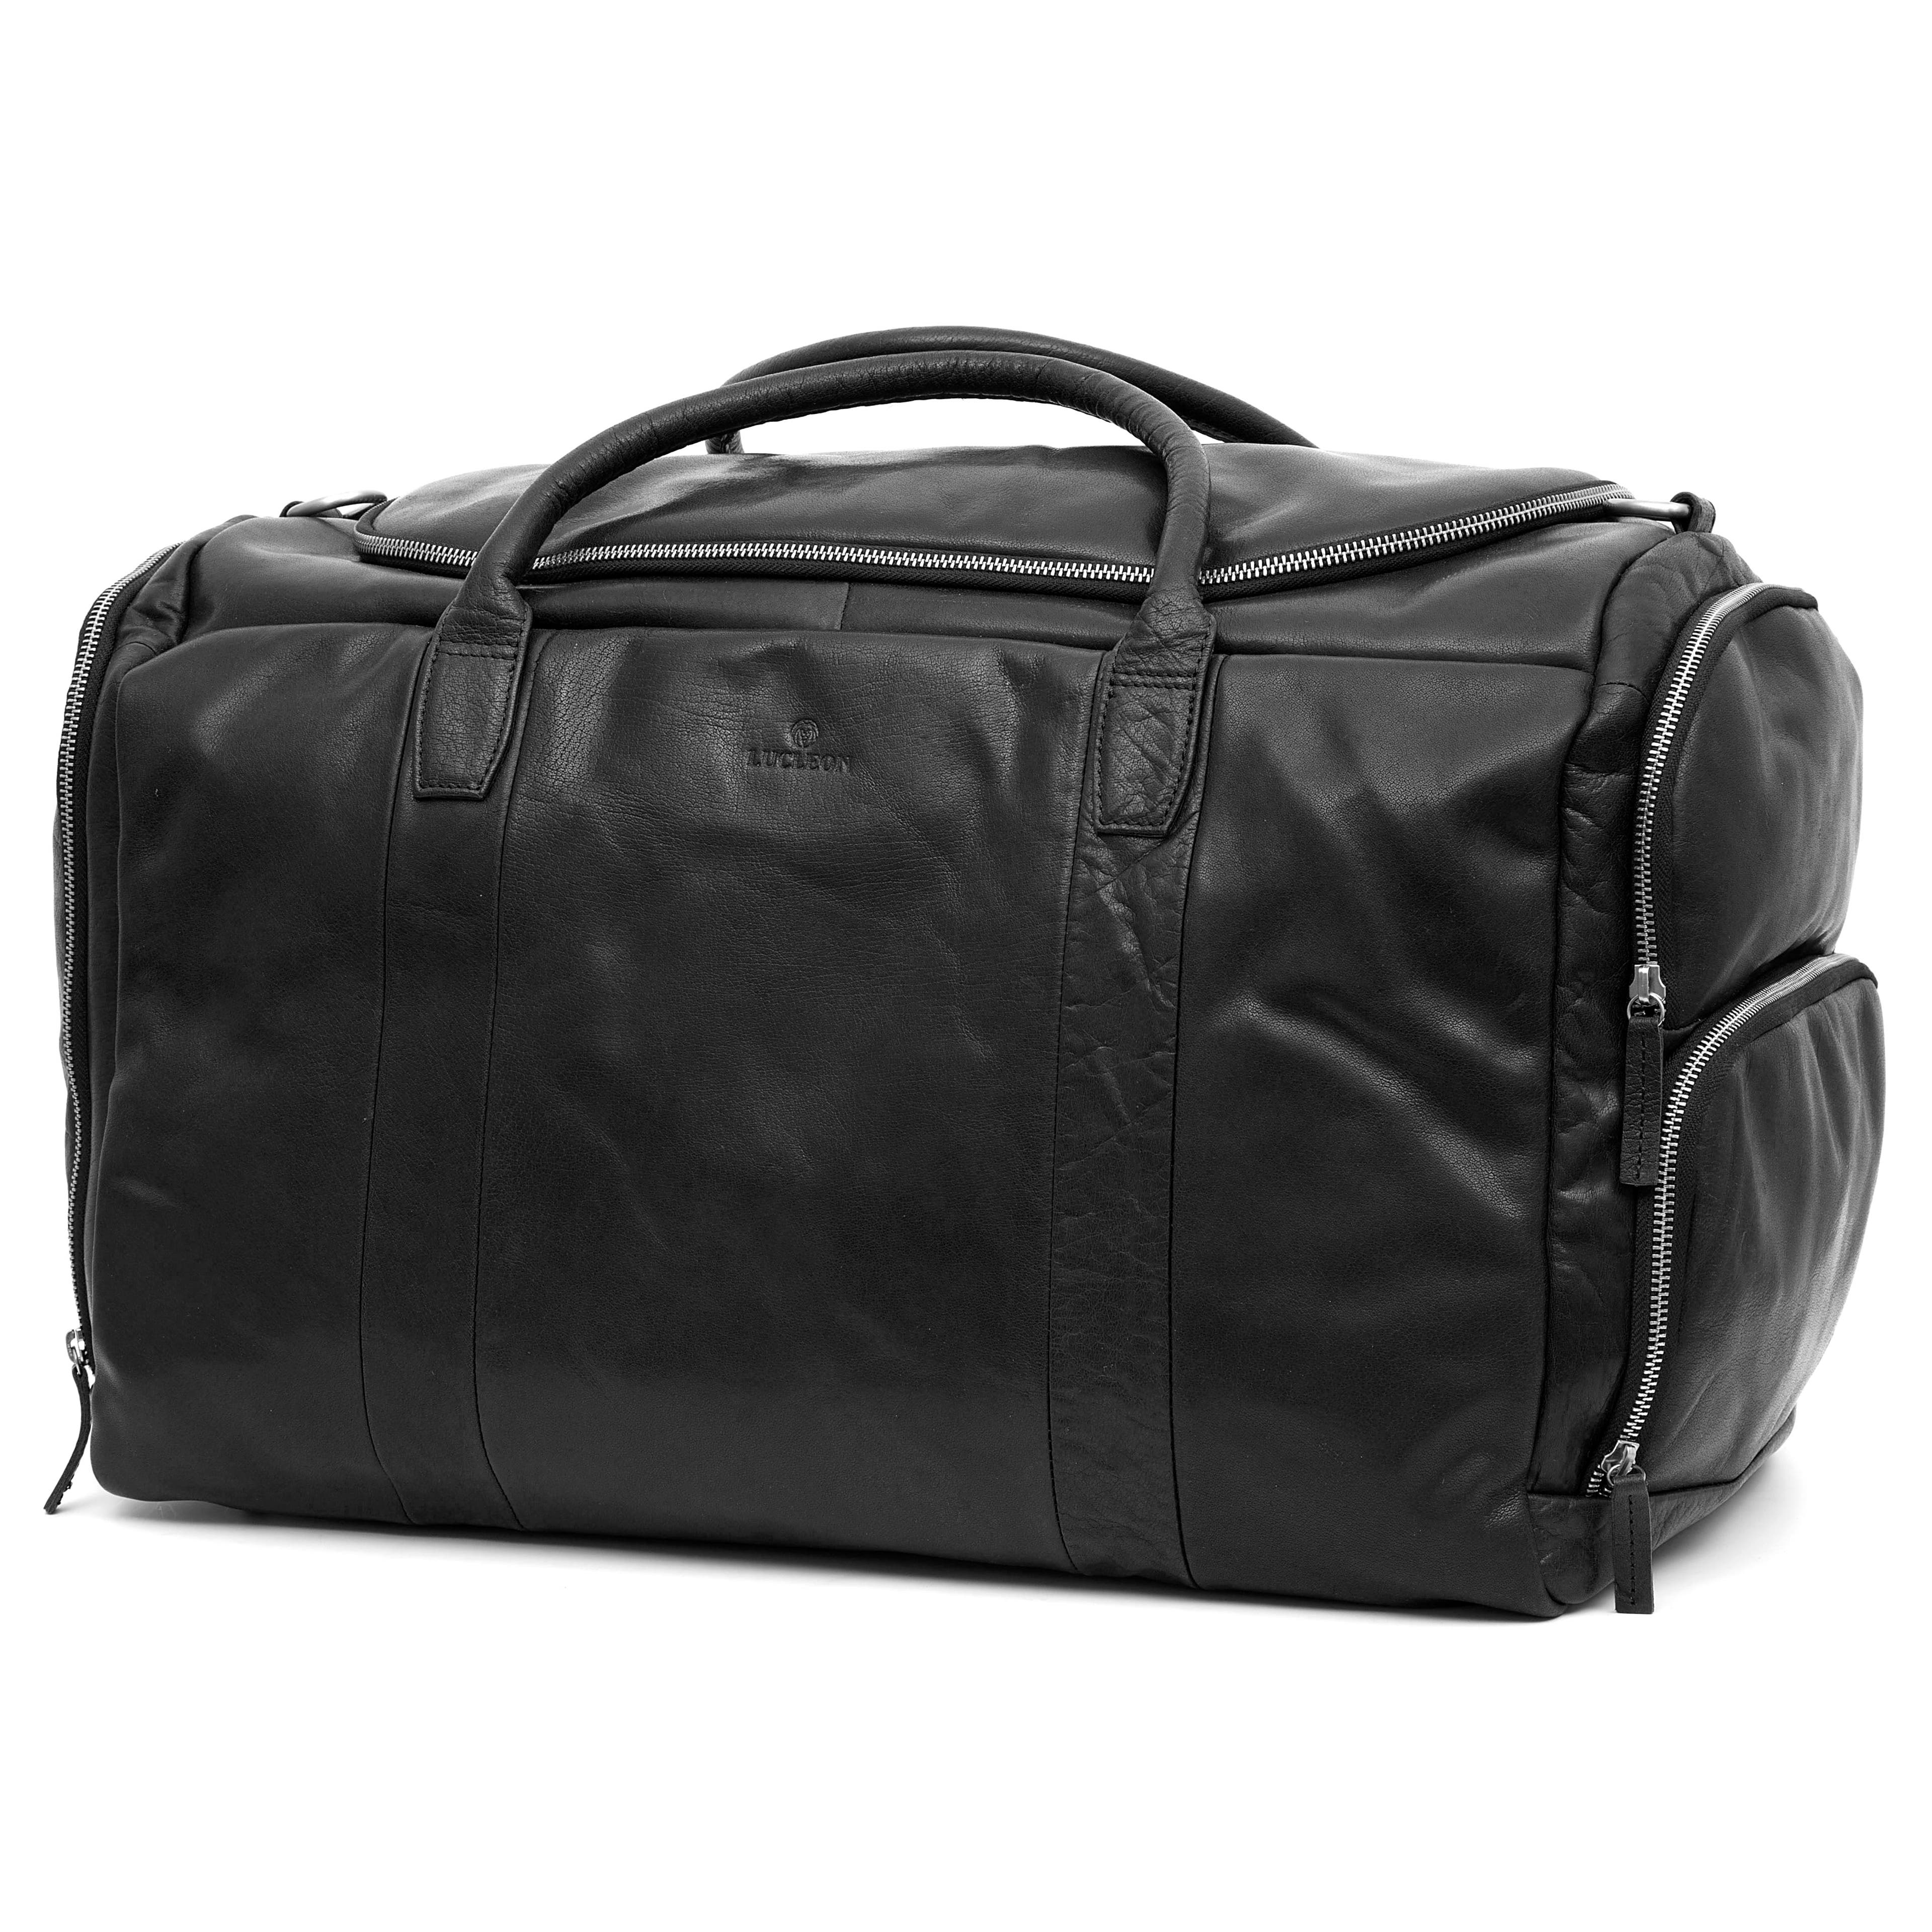 Montreal Große Schwarze Leder Duffle Bag Reisetasche